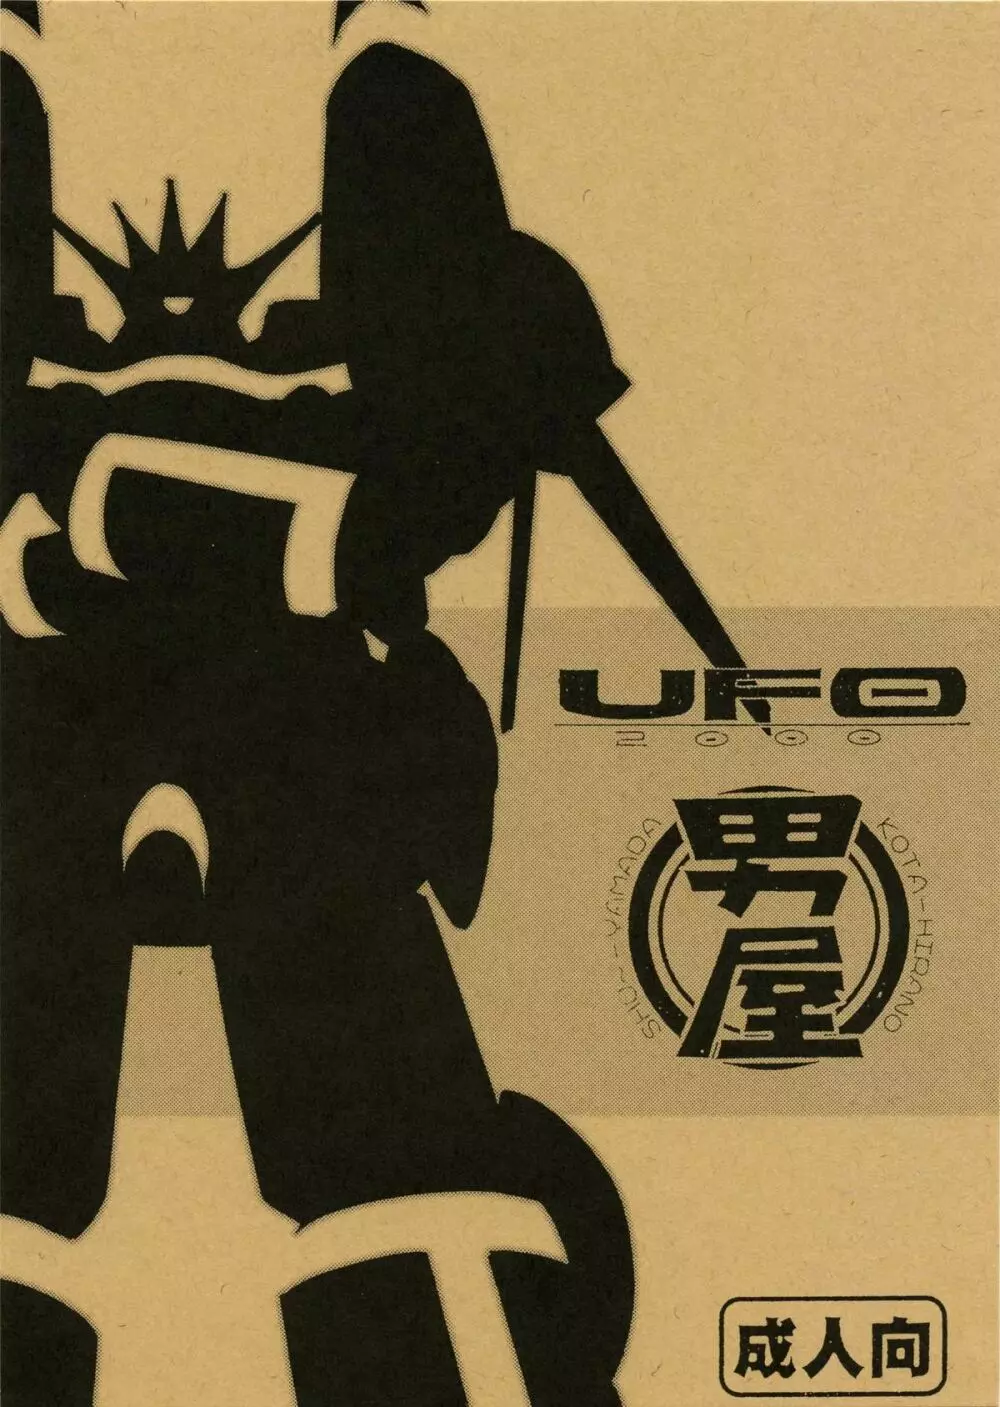 UFO 2000 UFO-TOP